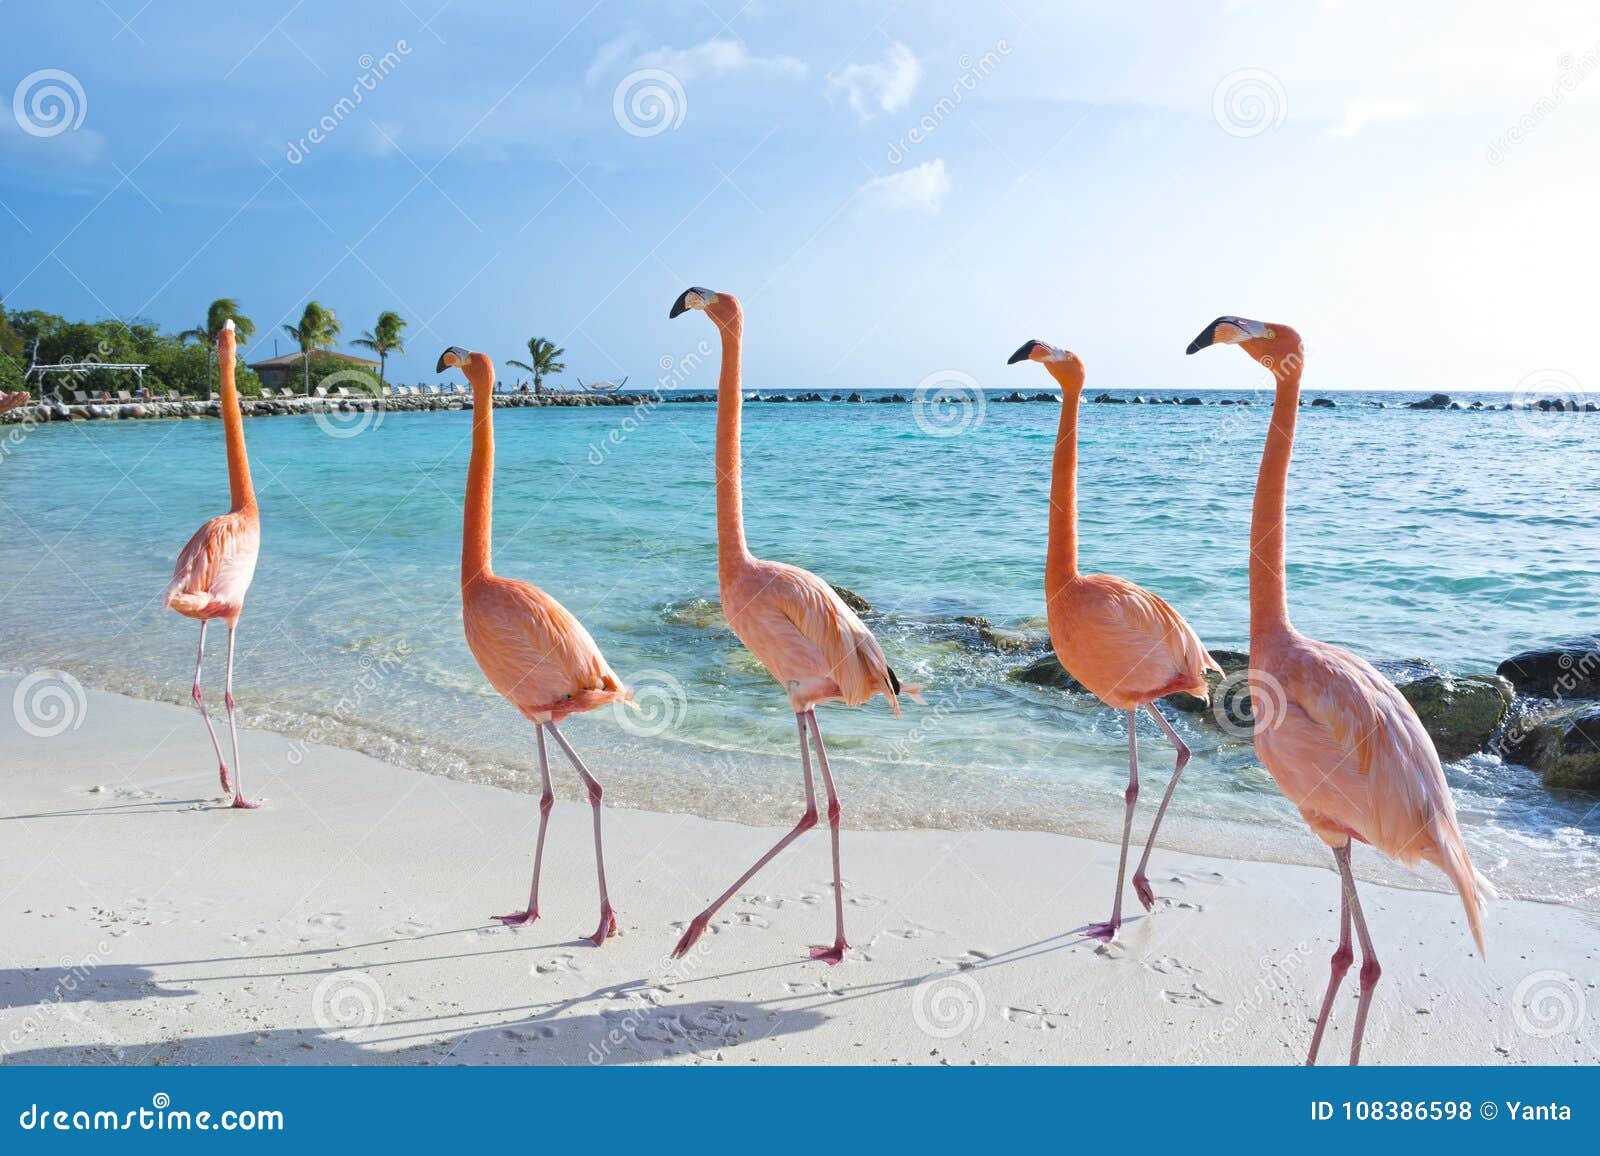 pink flamingo on the beach, aruba island